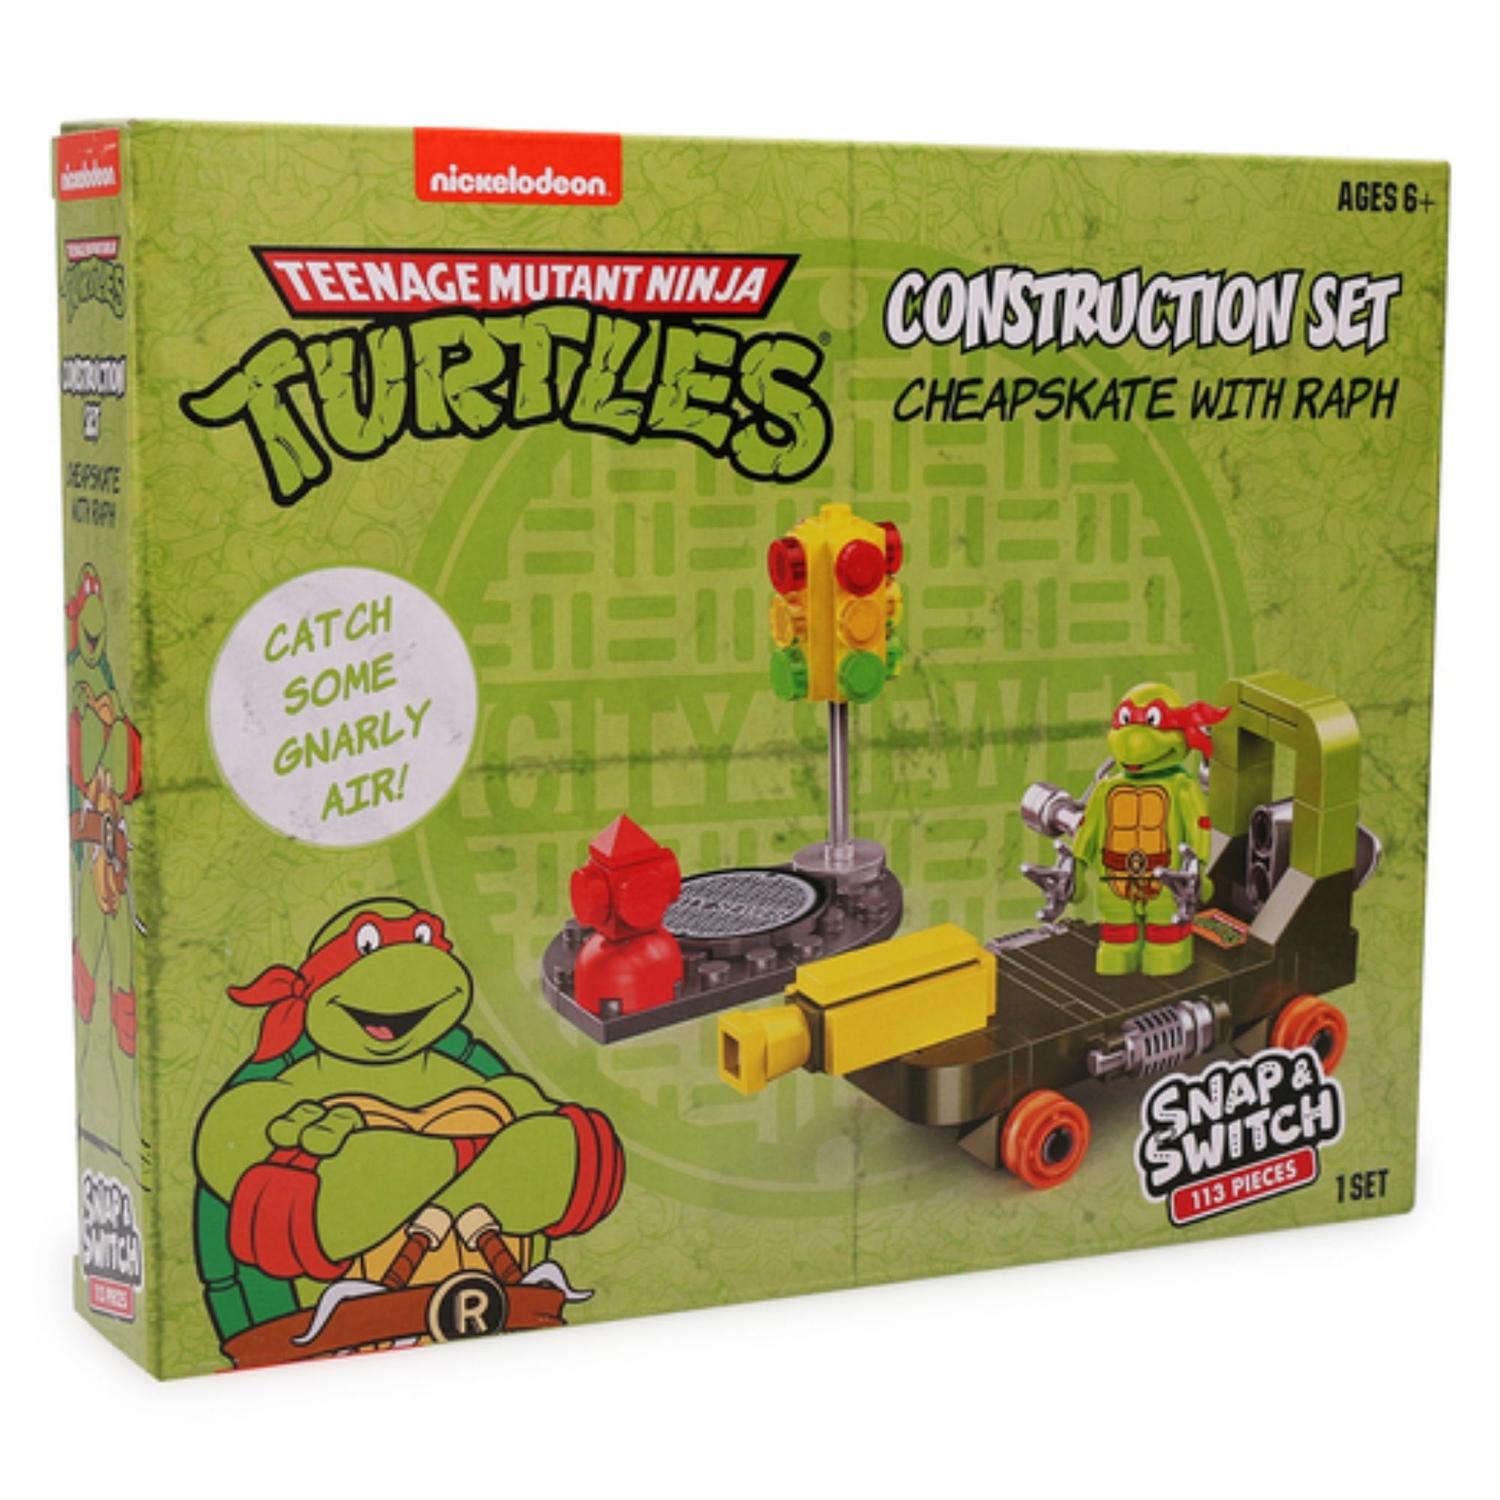 Set de Construcion Teenage Mutant Ninja Turtles® - Cheapskate Raph